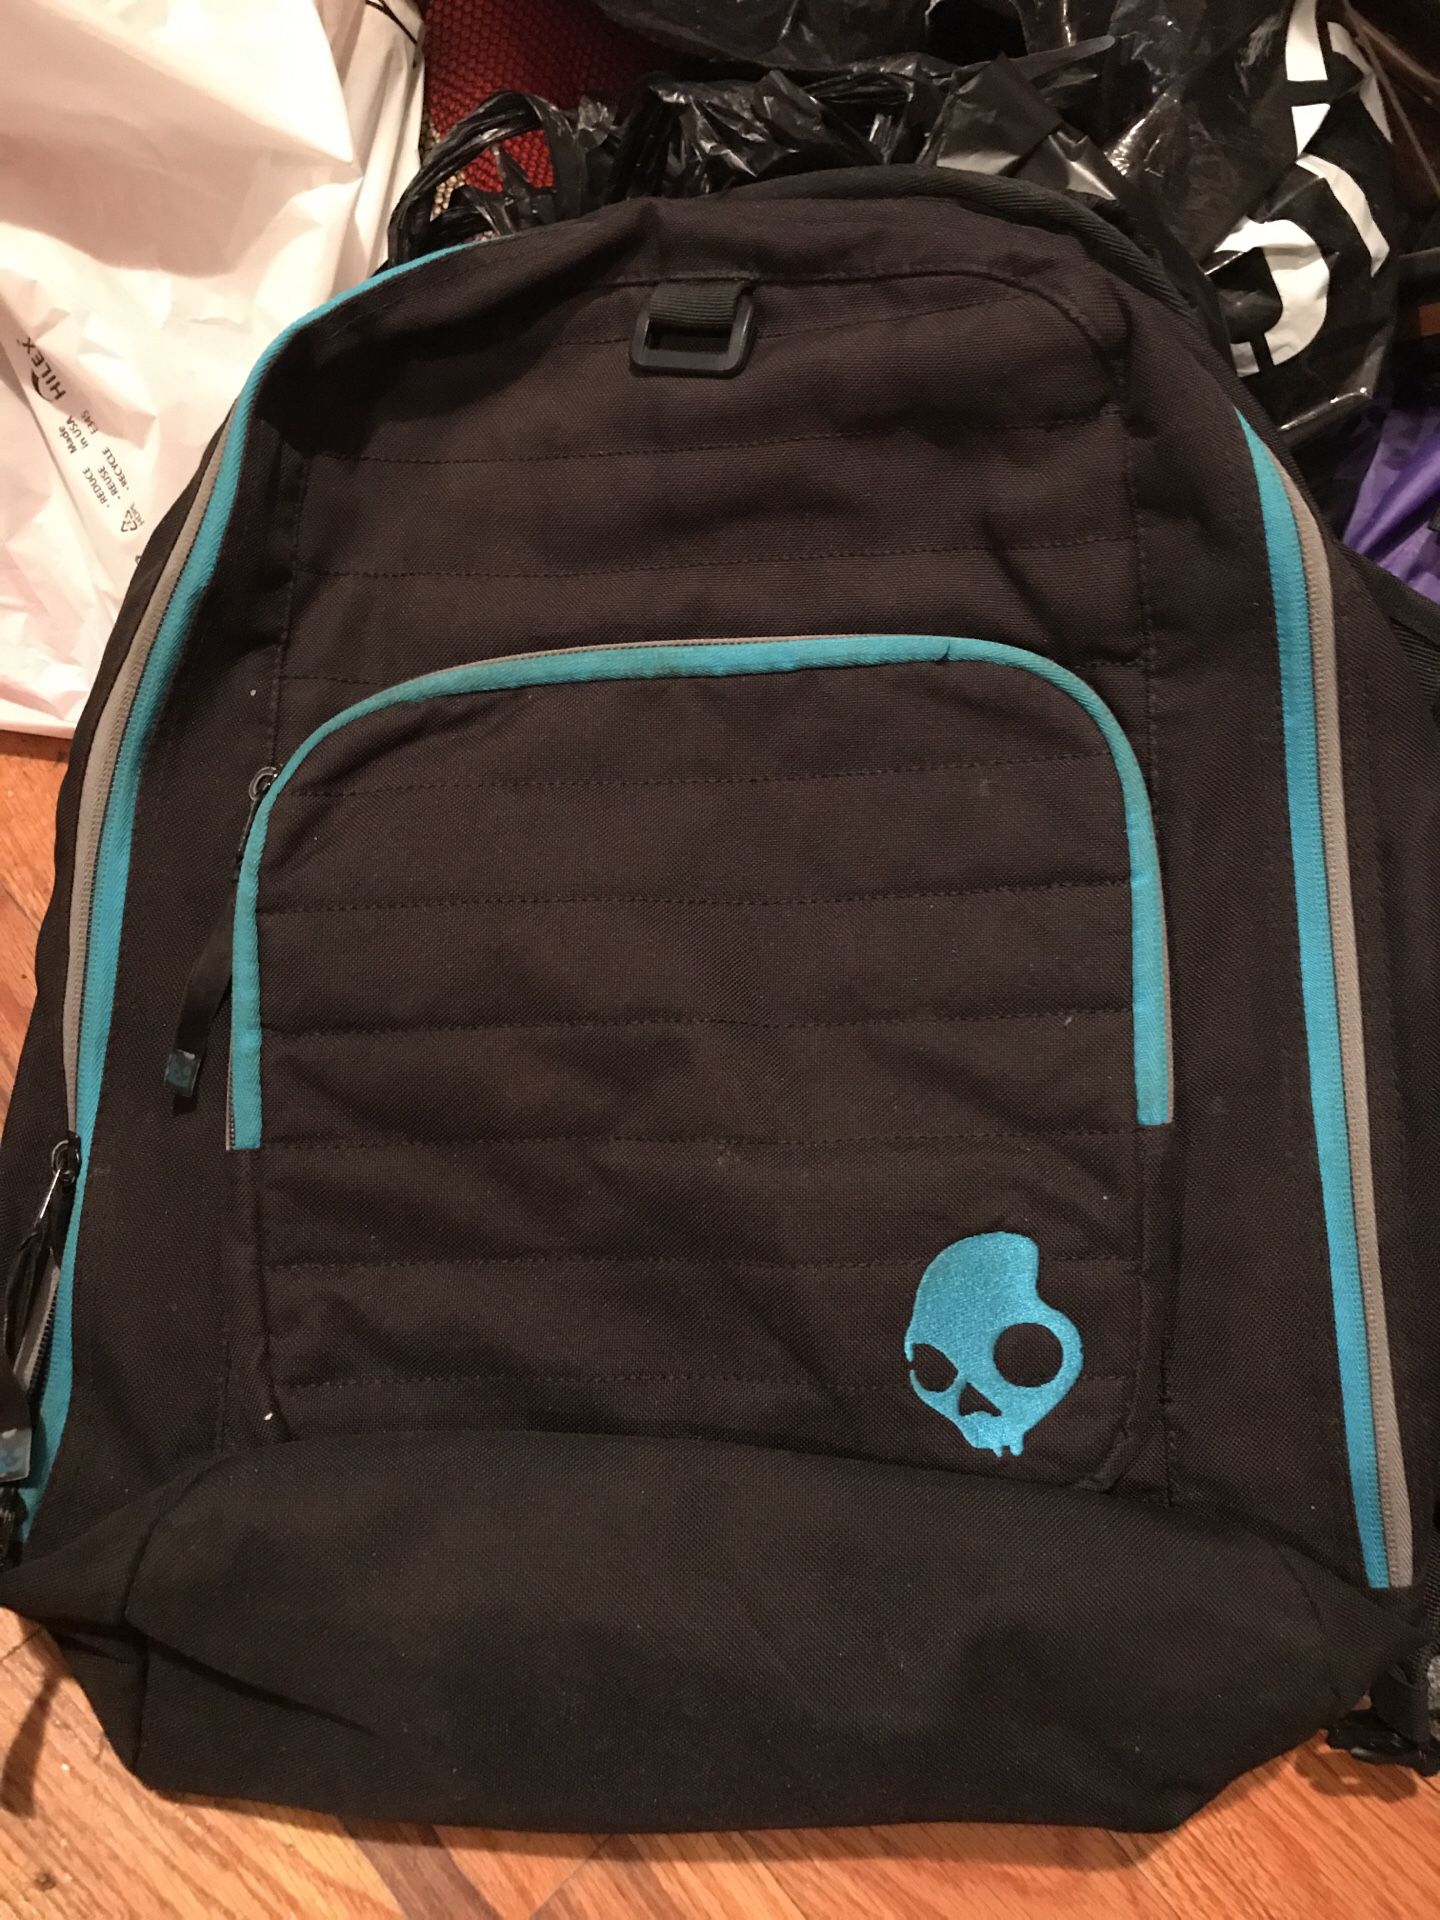 Skullcandy skull candy book bag backpack school gym carry on laptop